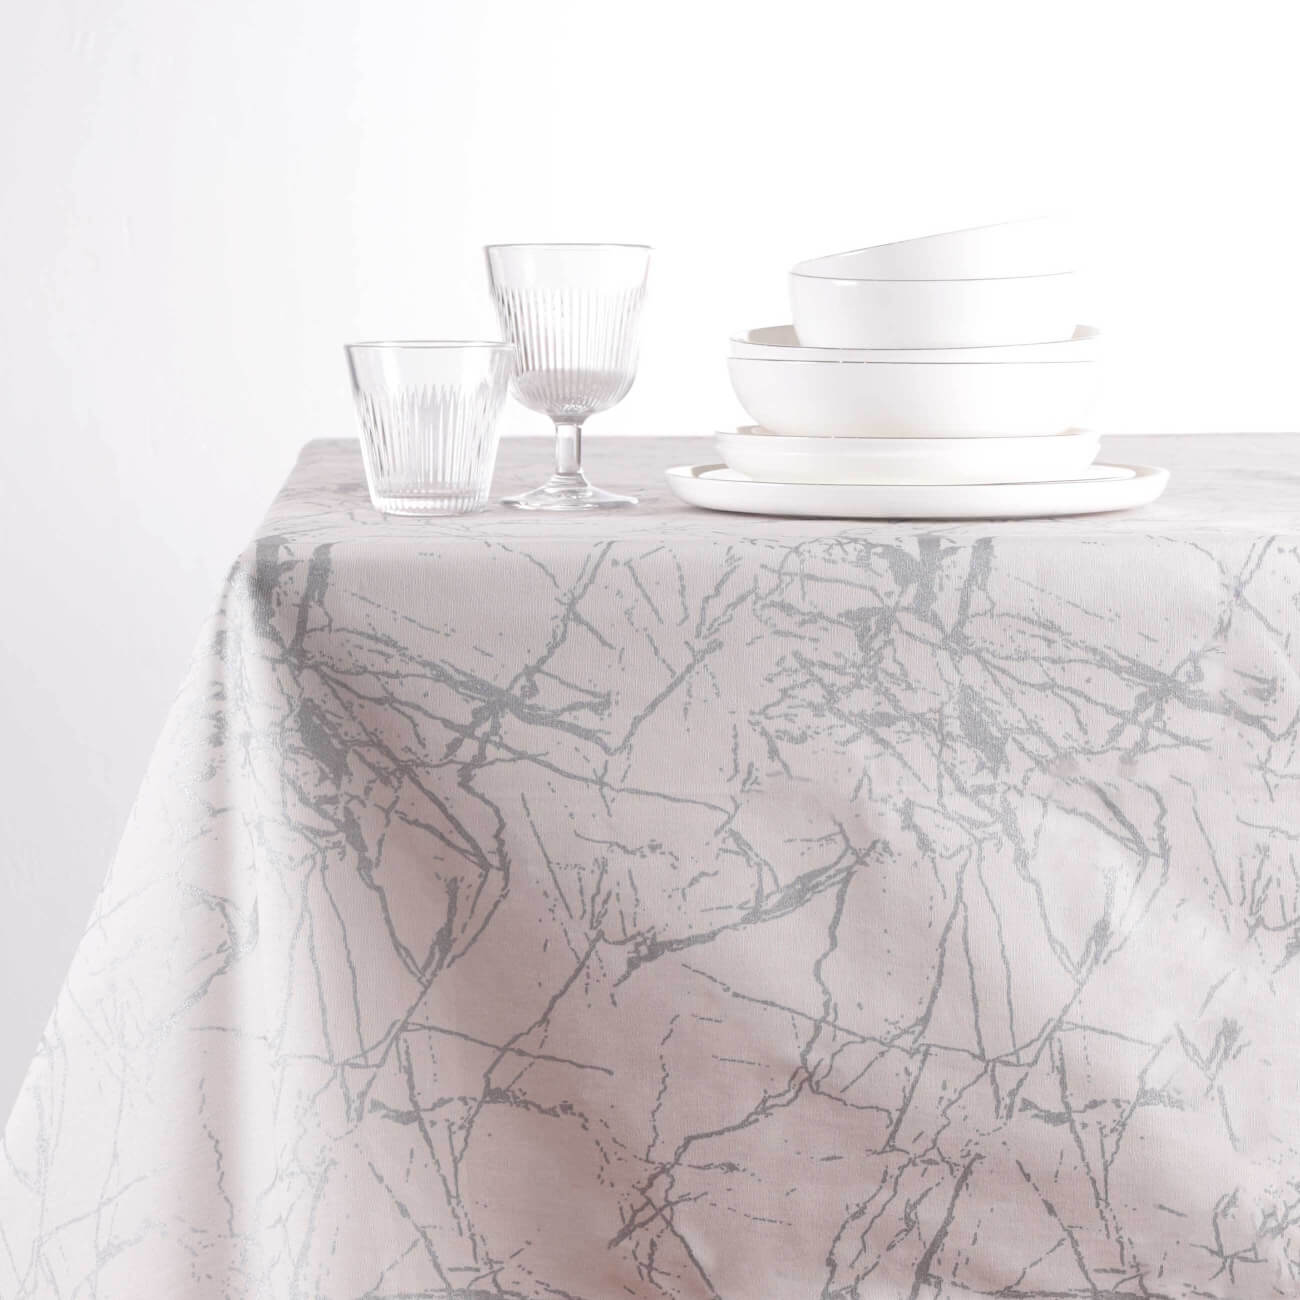 Tablecloth, 170x250 cm, cotton / acrylic, silver-gray, Marble foil изображение № 1